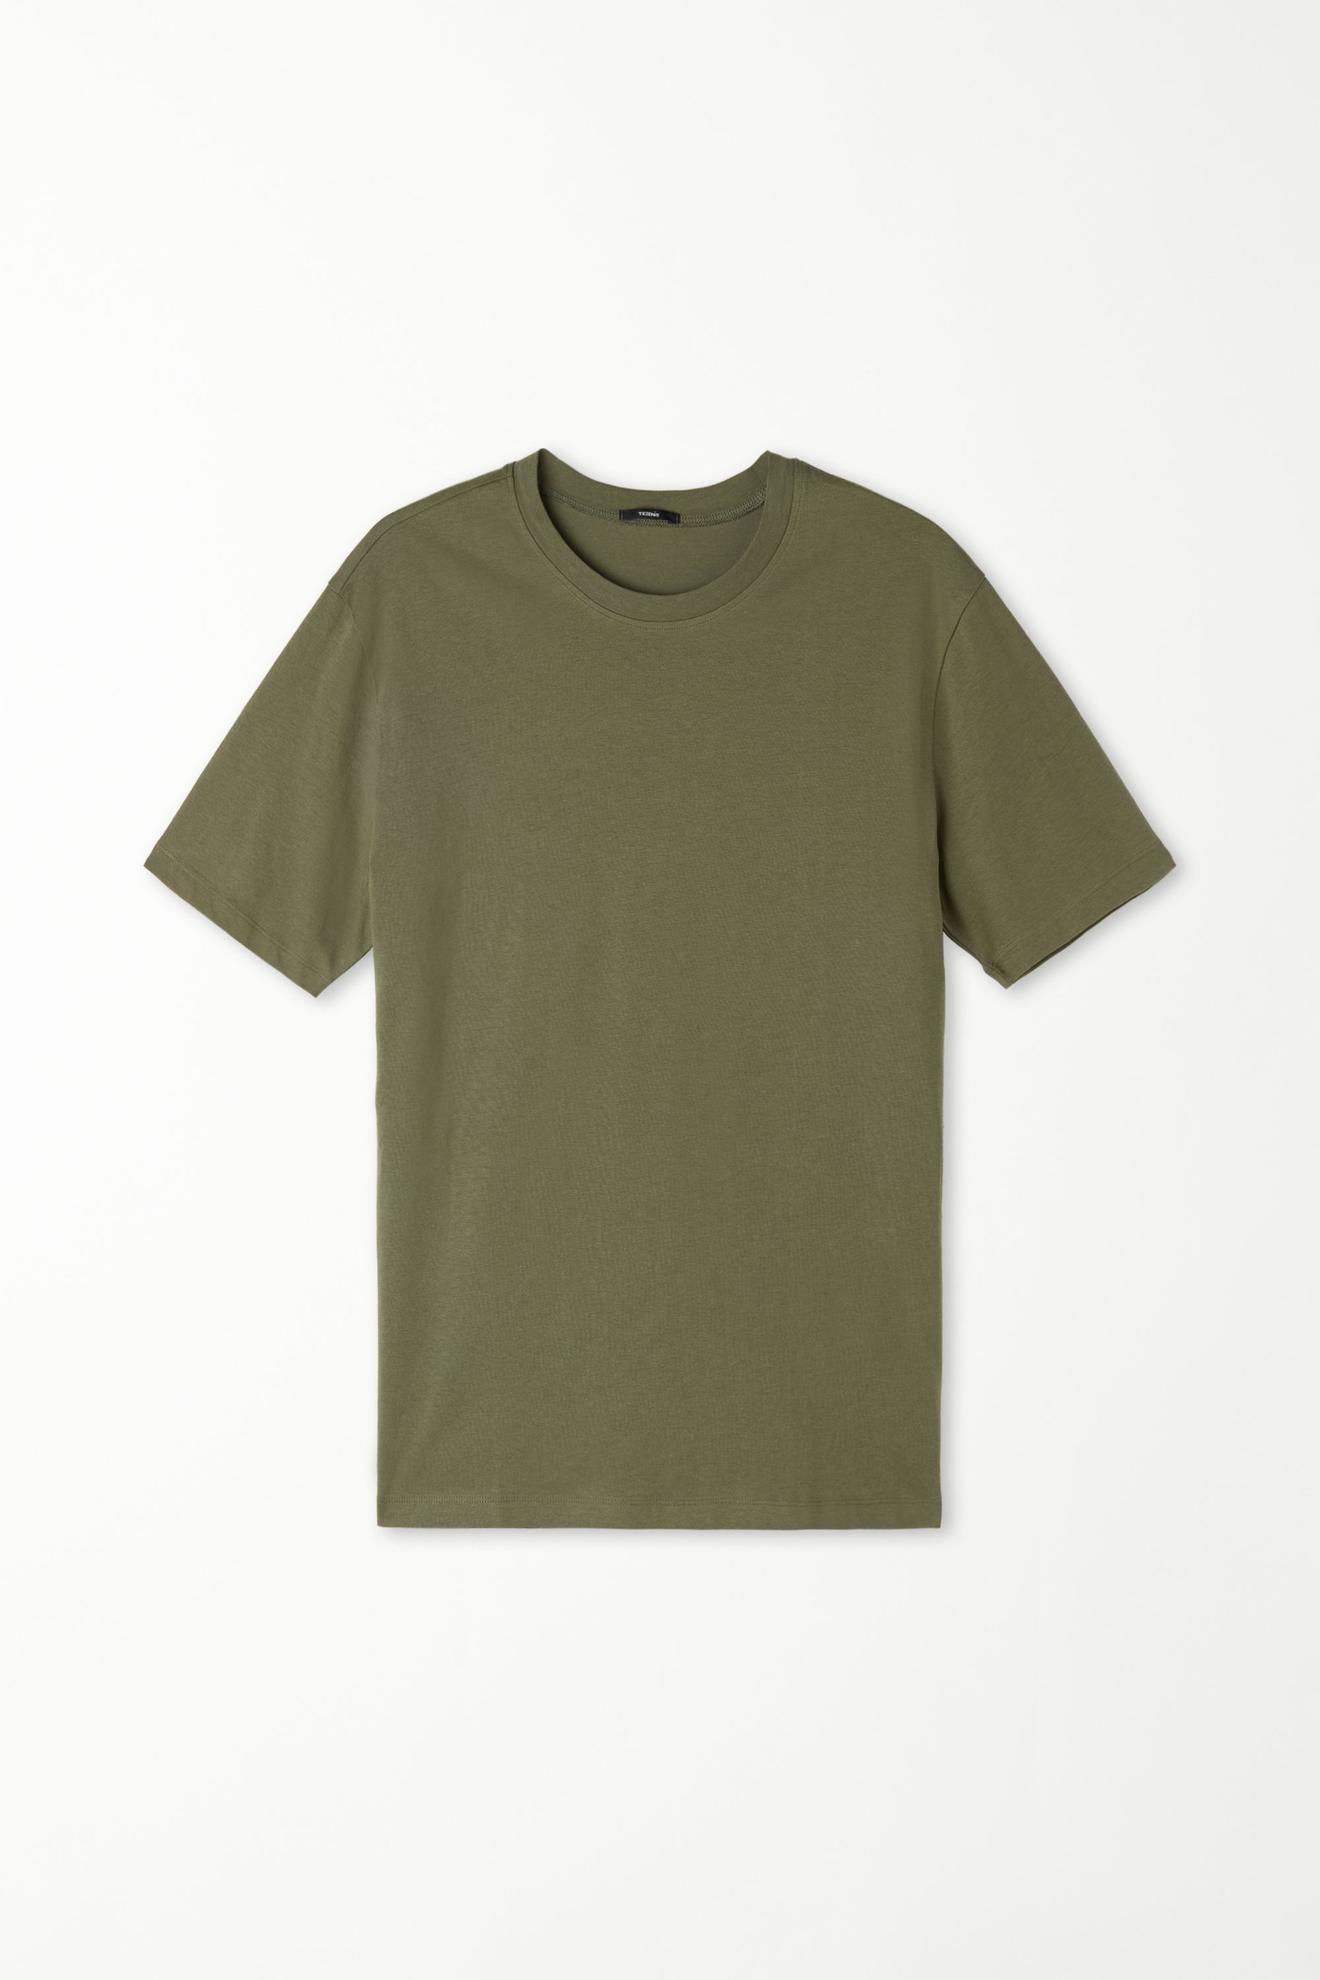 Oferta de Camiseta Basic Amplia de Algodón por 9,99€ en Tezenis